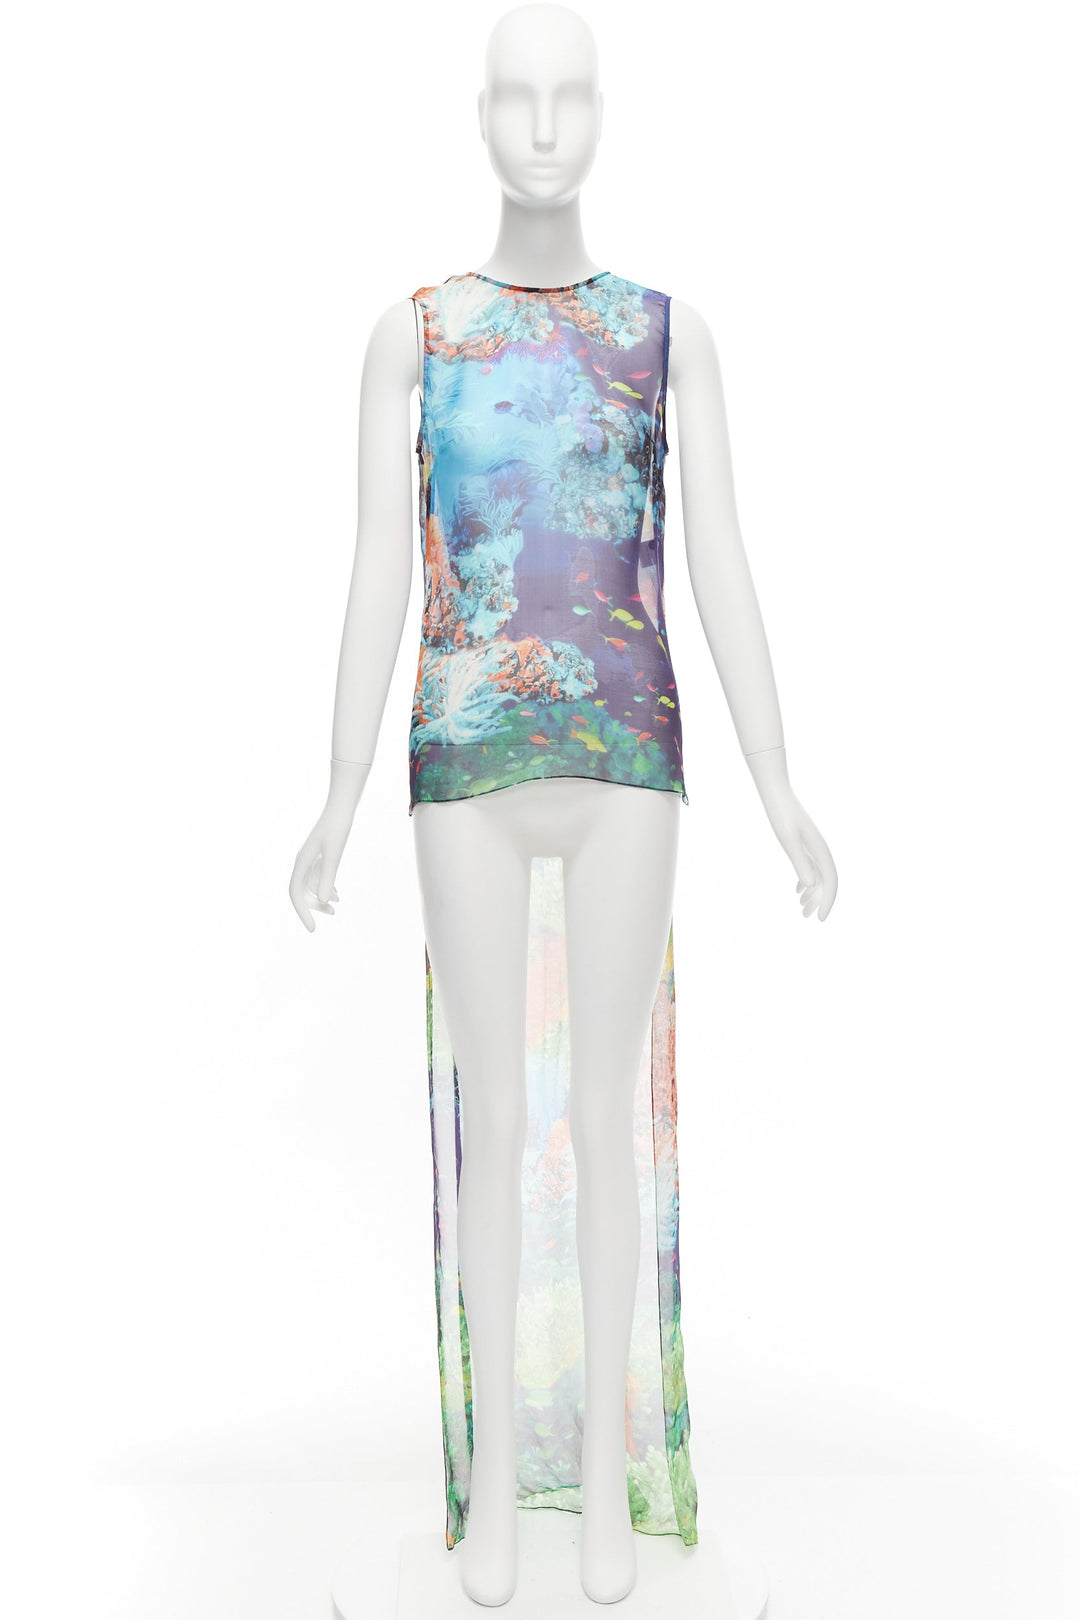 MARY KATRANTZOU 100% silk colourful aquatic print high low sheer top UK8 S